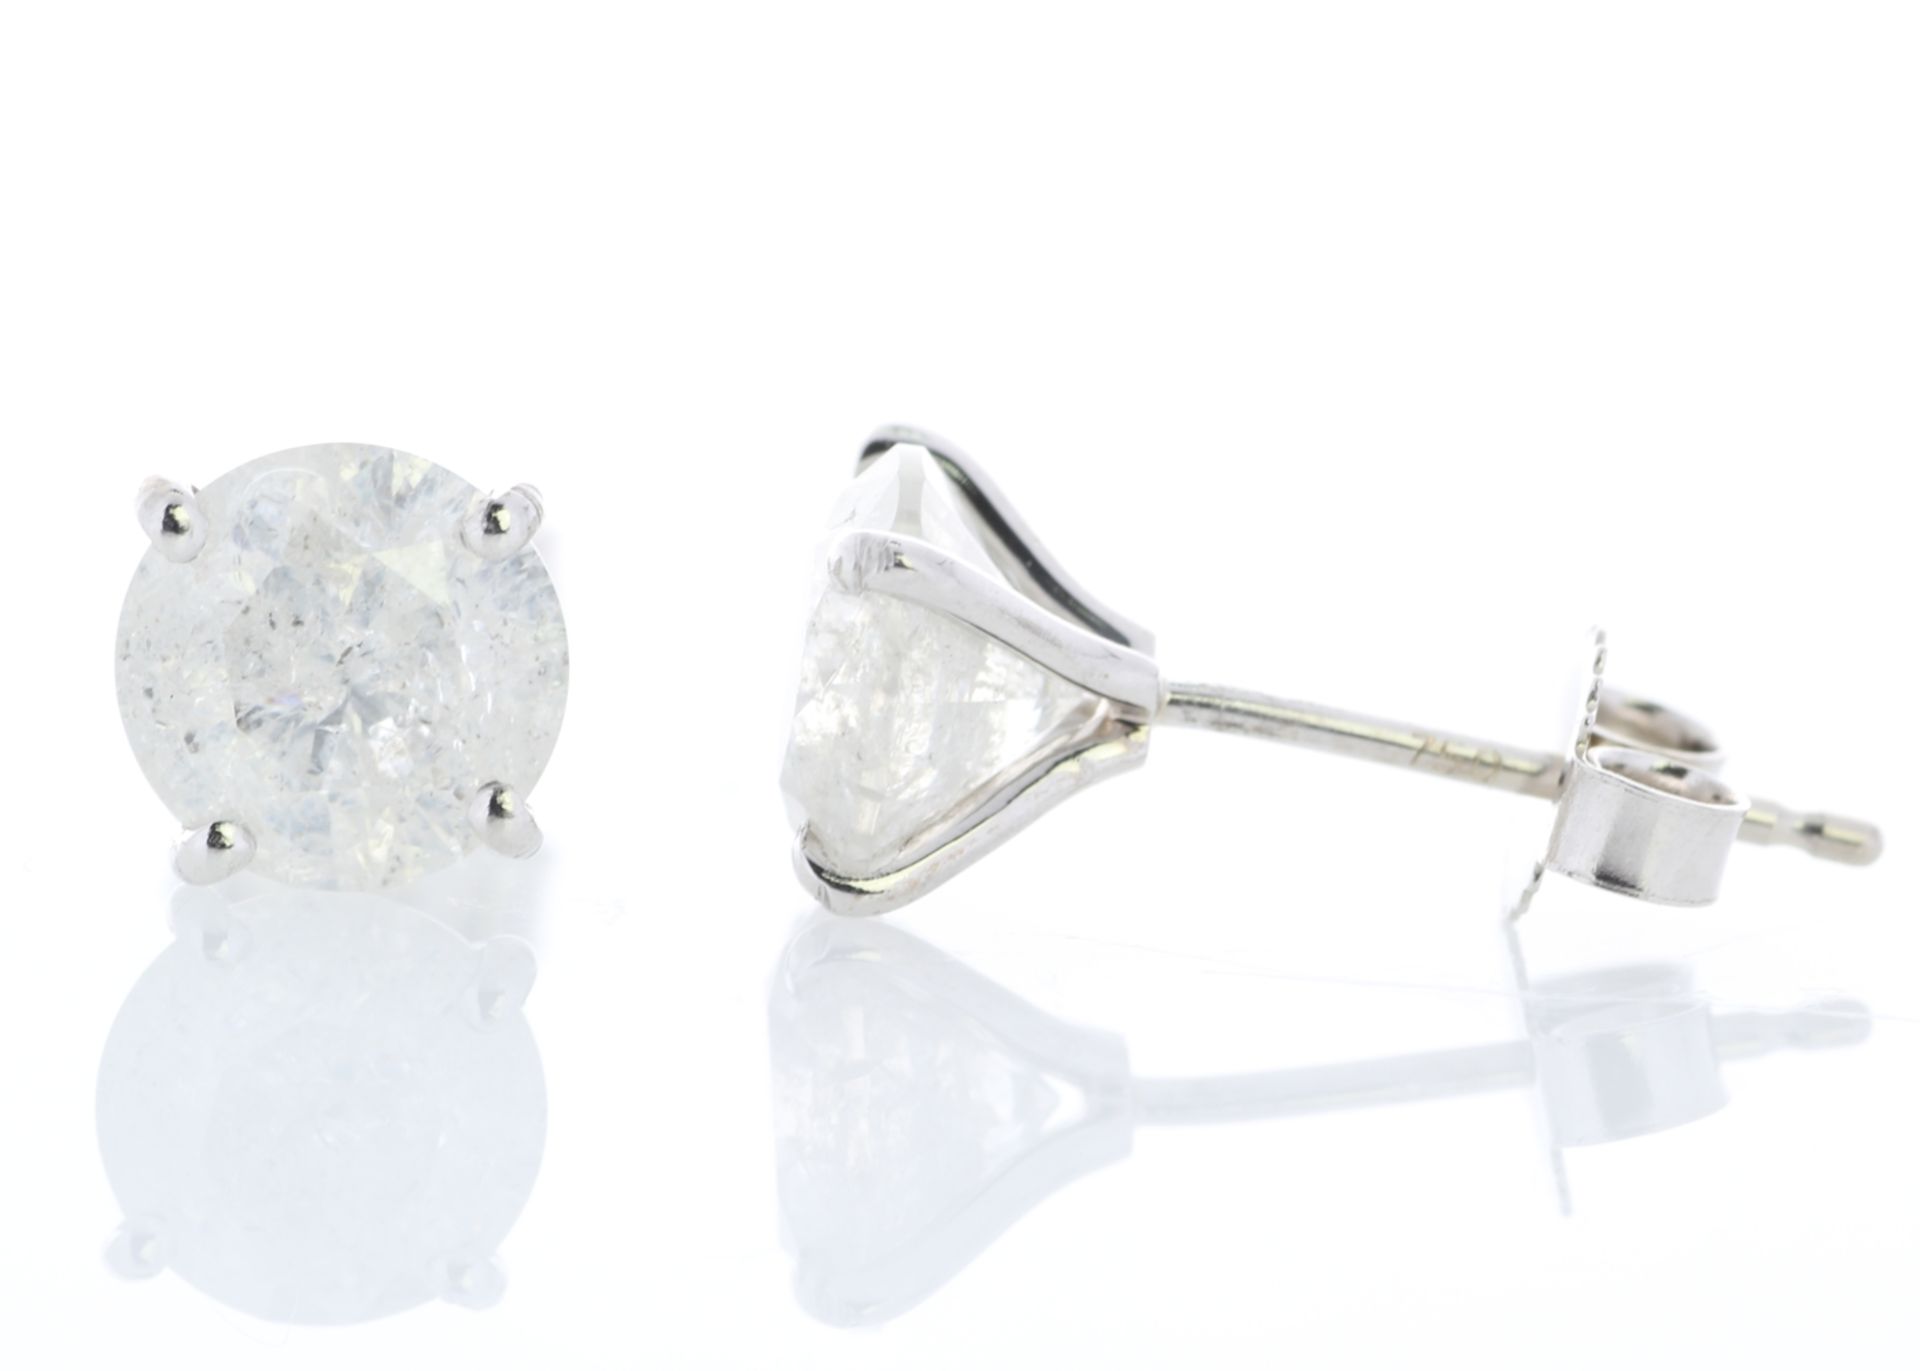 18ct White Gold Single Stone Prong Set Diamond Earring 2.56 Carats - Image 2 of 3